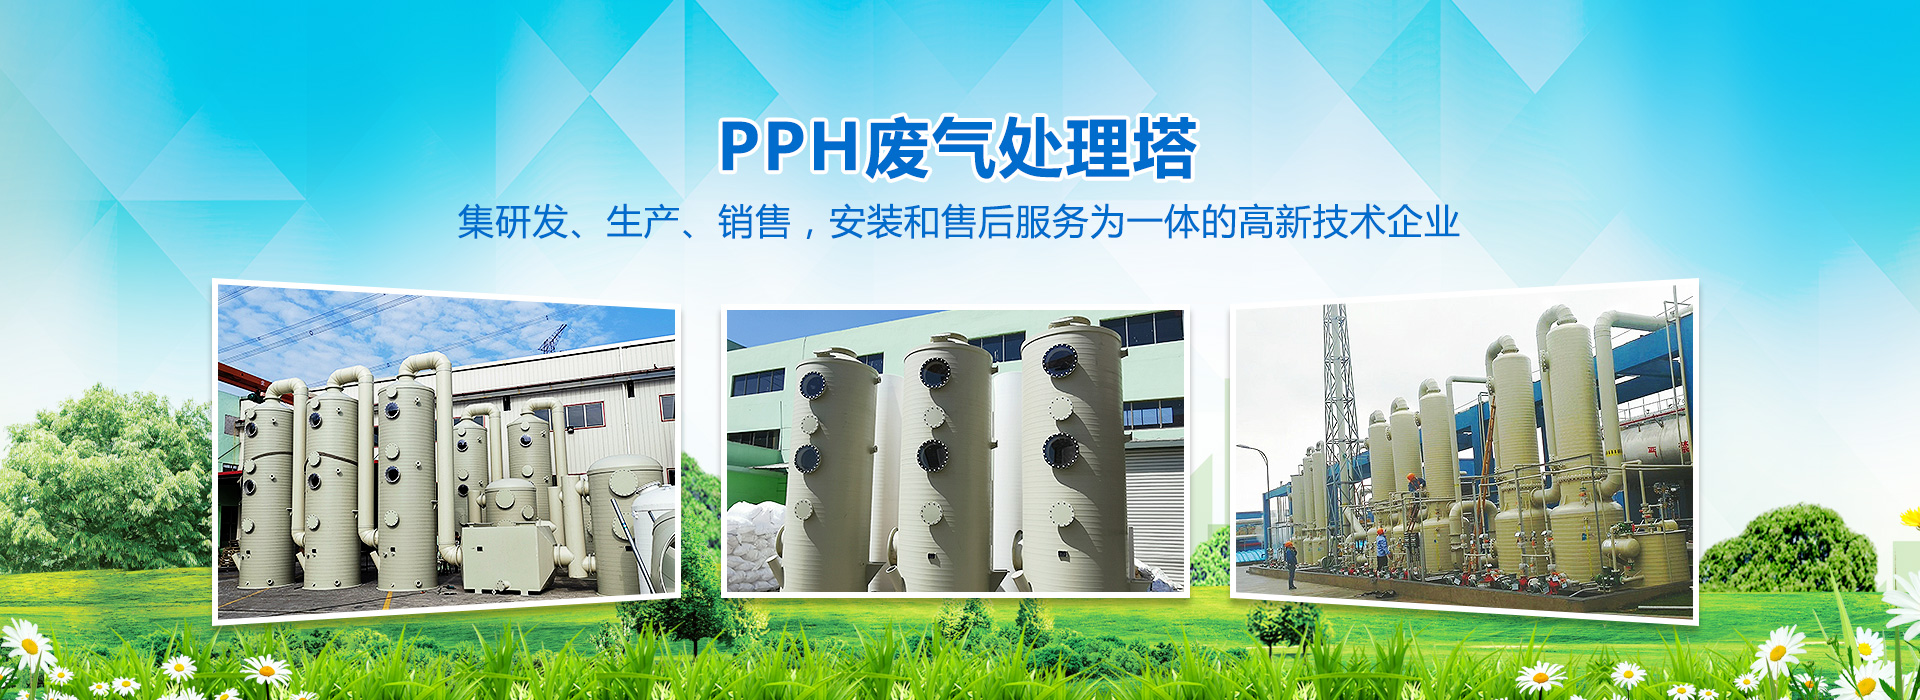 PPH废气处理塔